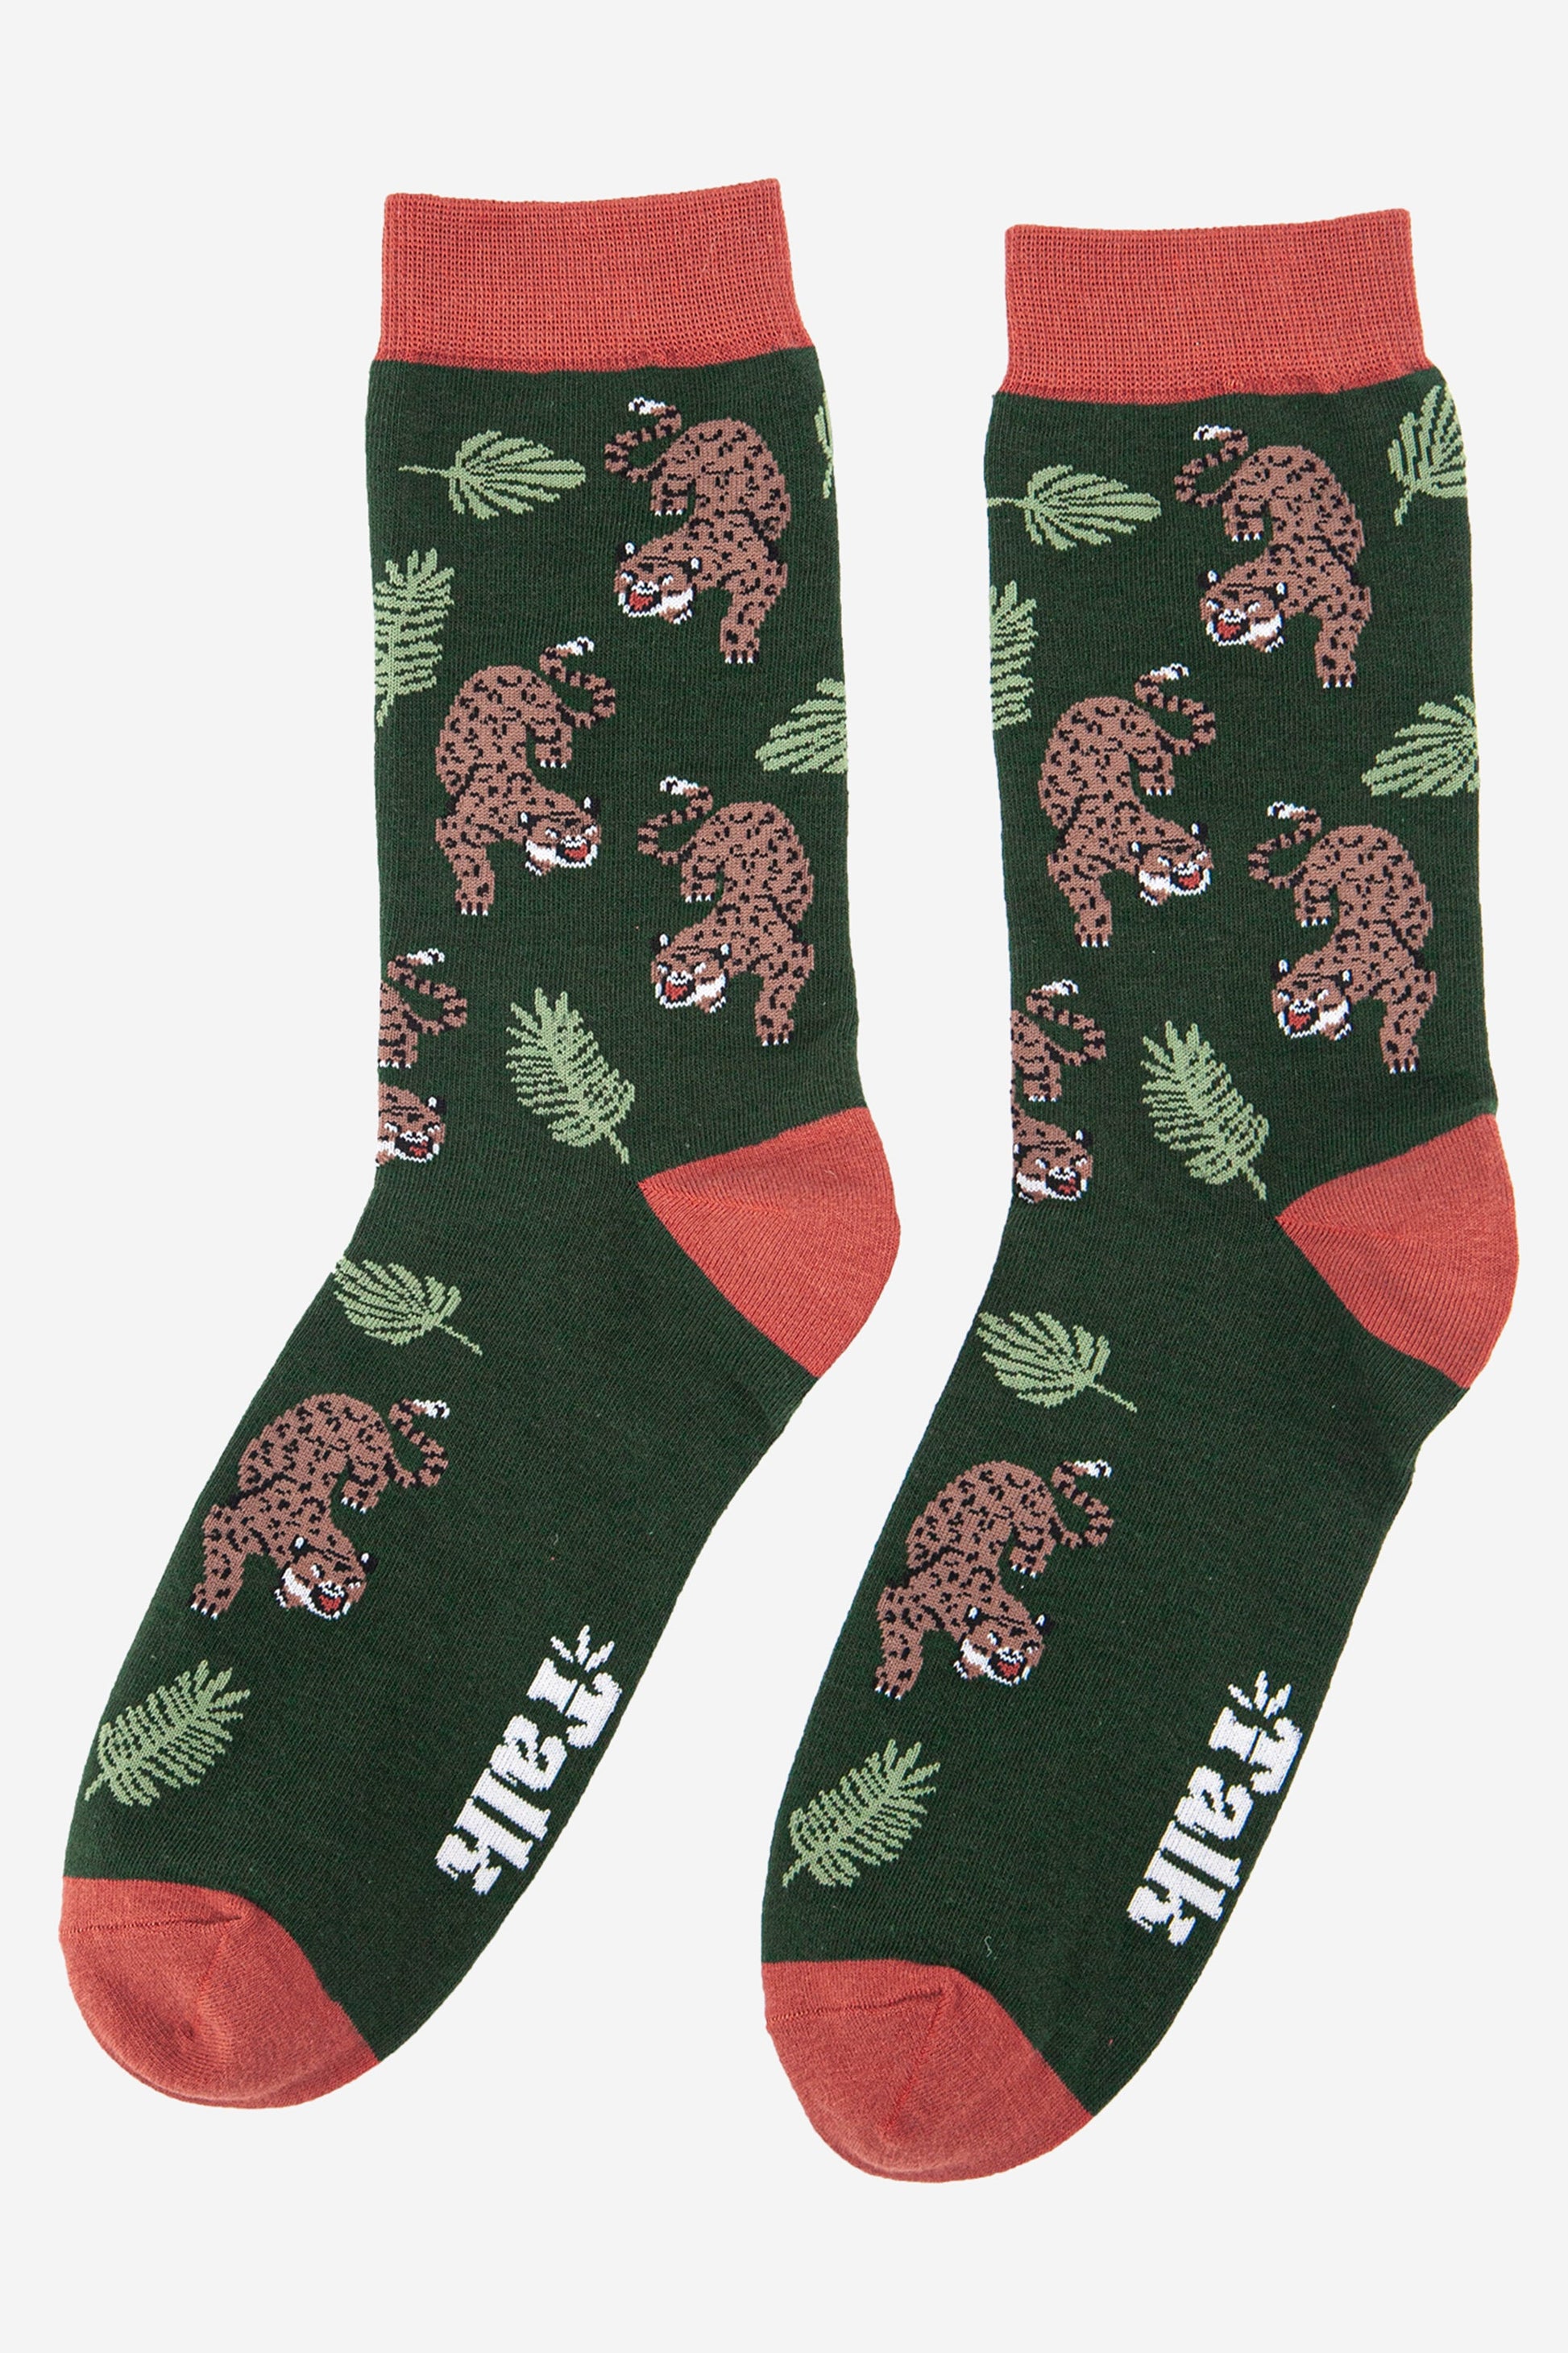 mens cheetah print bamboo socks in green with orange toe, heel and cuff